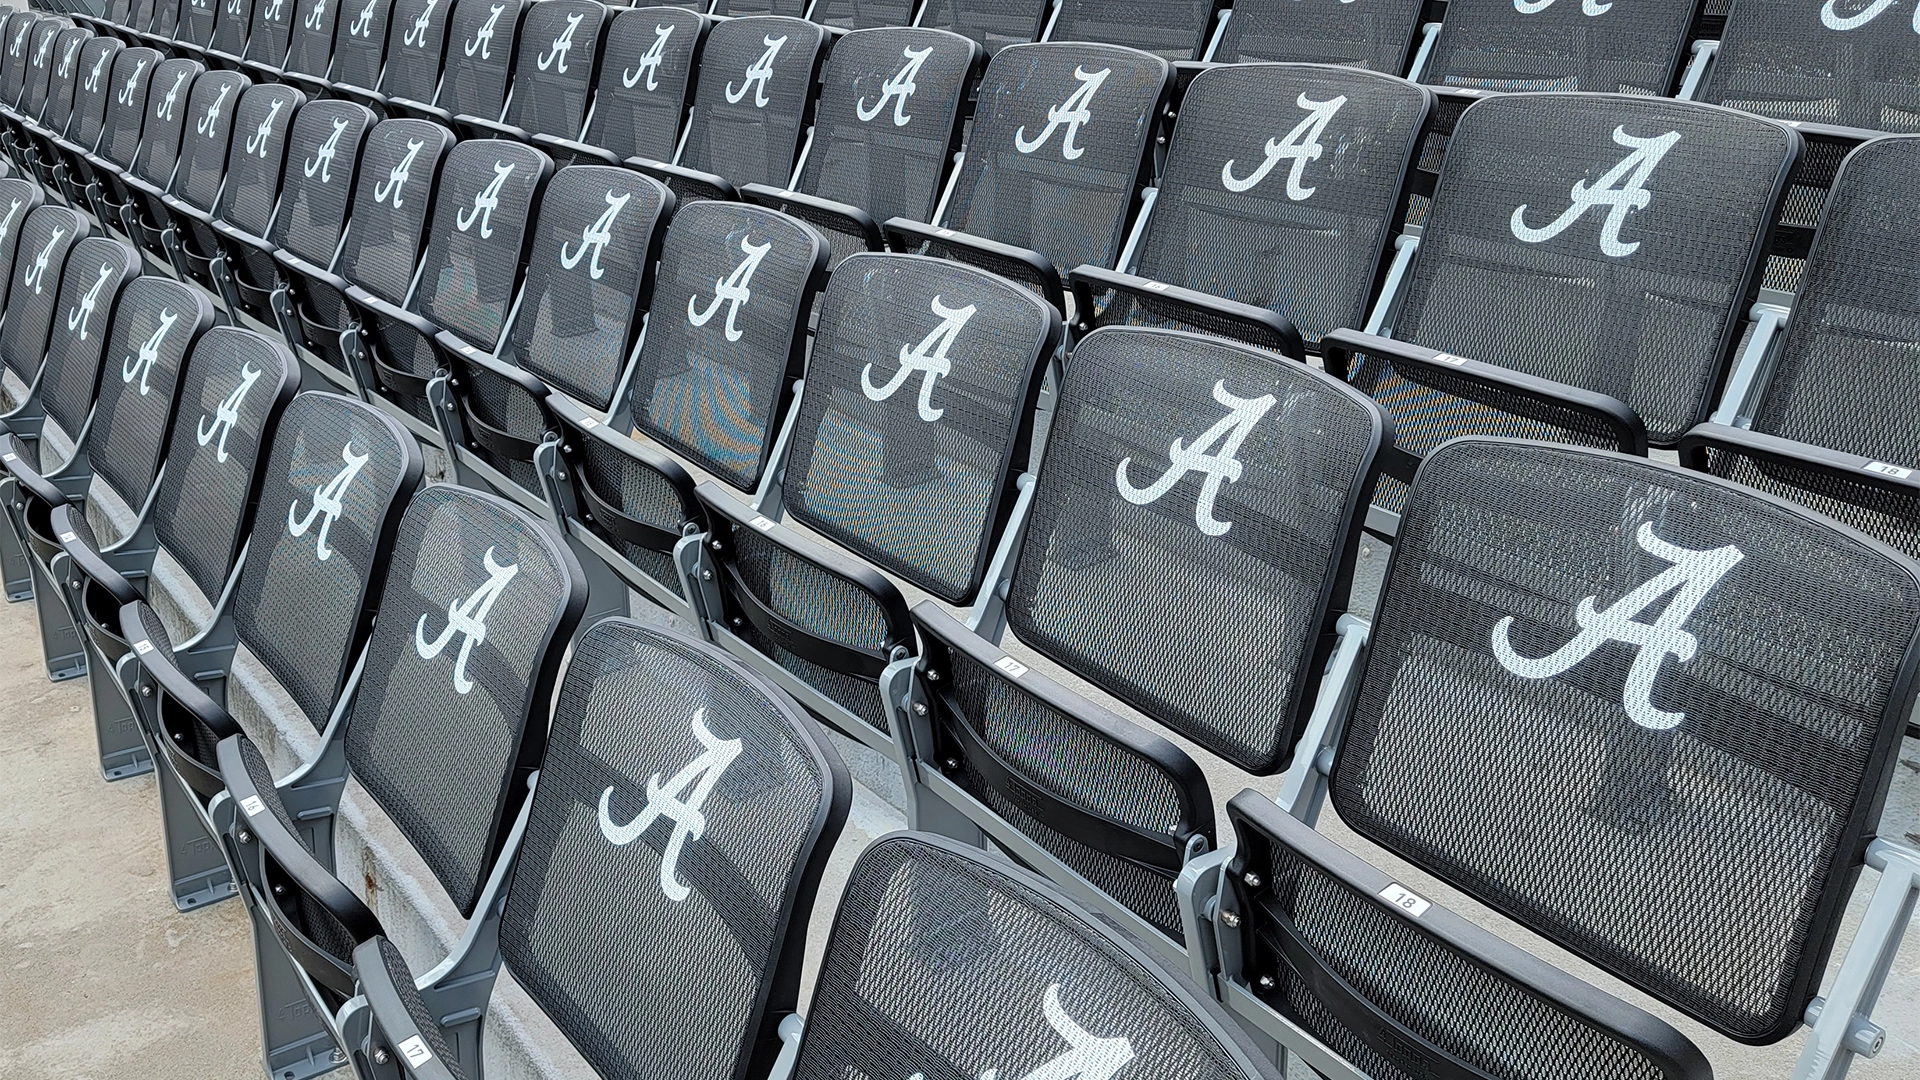 upclose shot of custom branded 4topps mesh row seating for university of Alabama